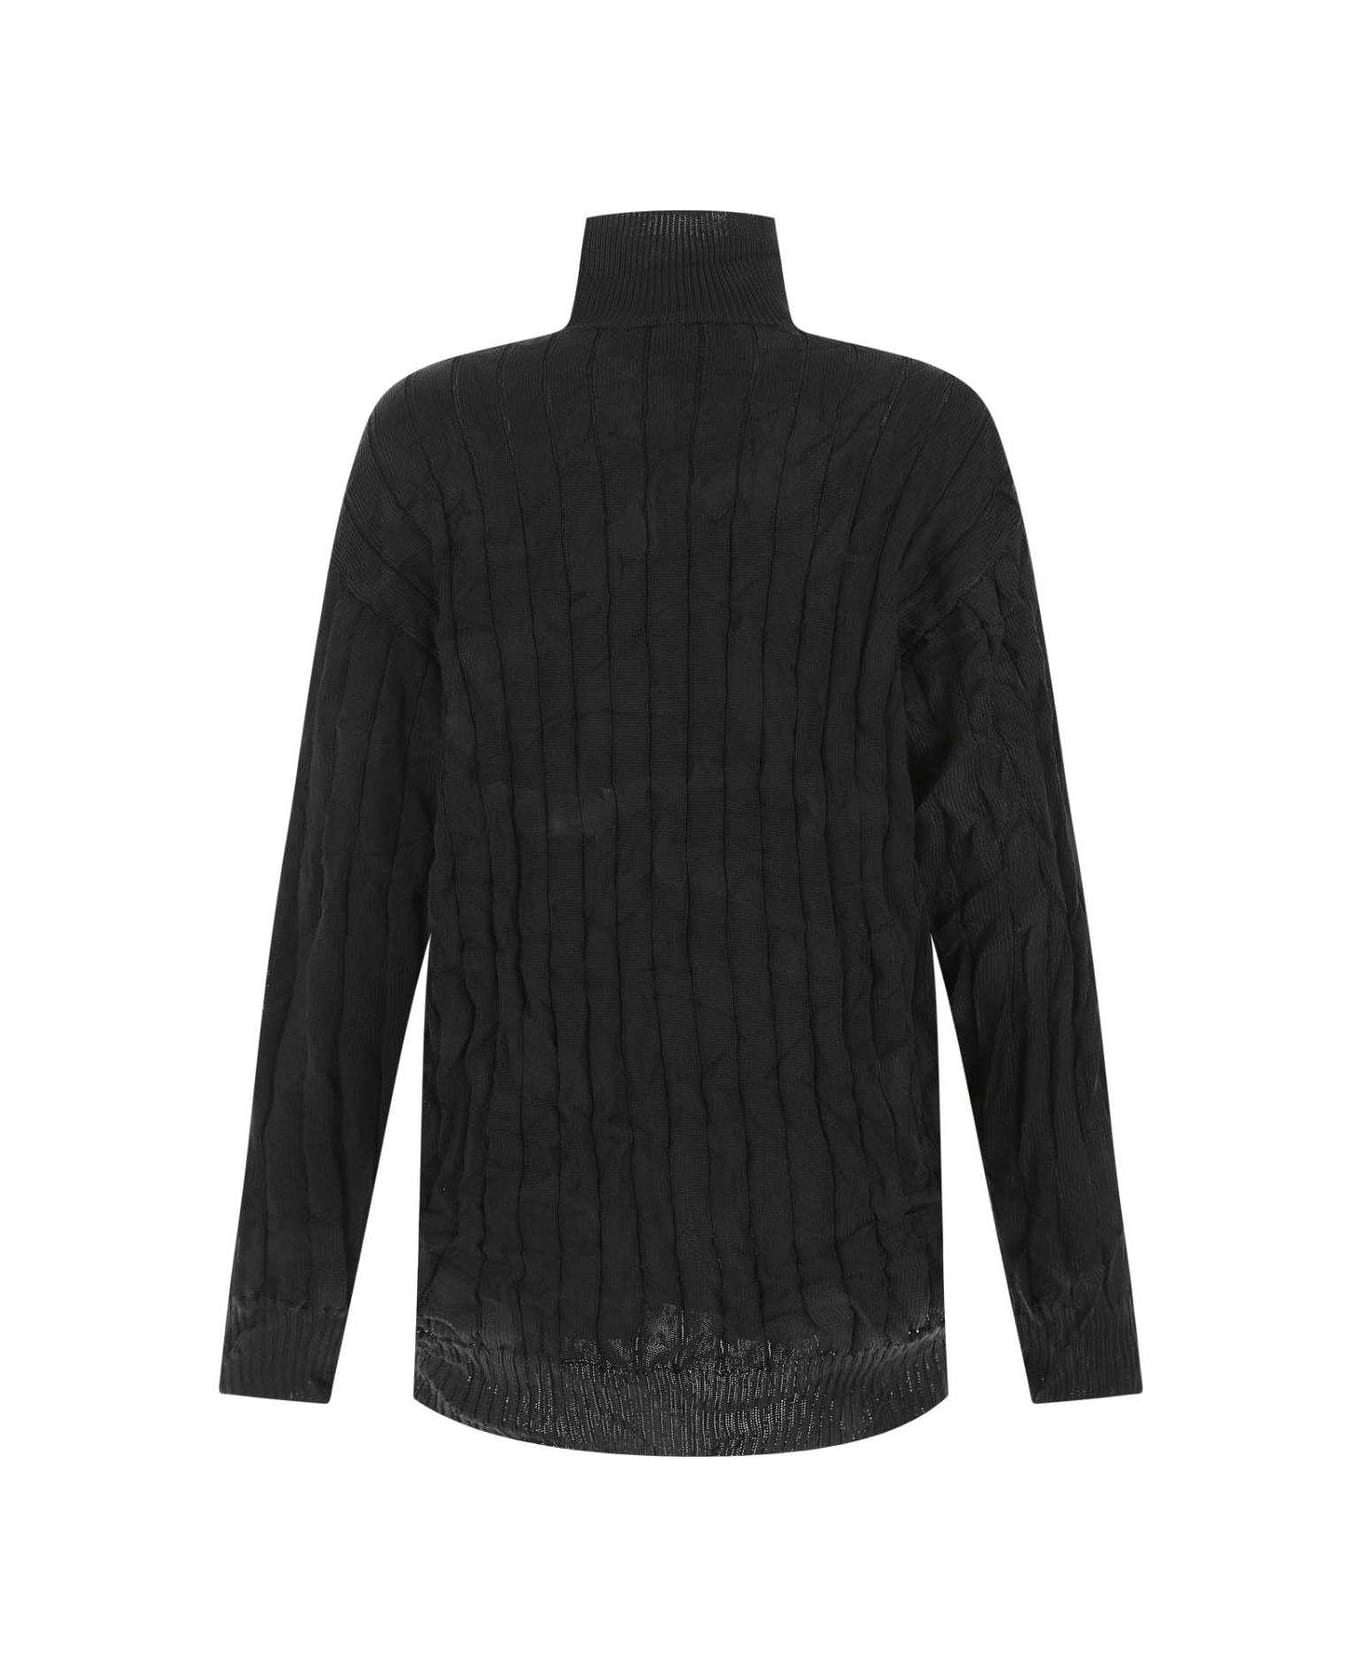 Balenciaga Creased Turtleneck Knit Jumper - BLACK